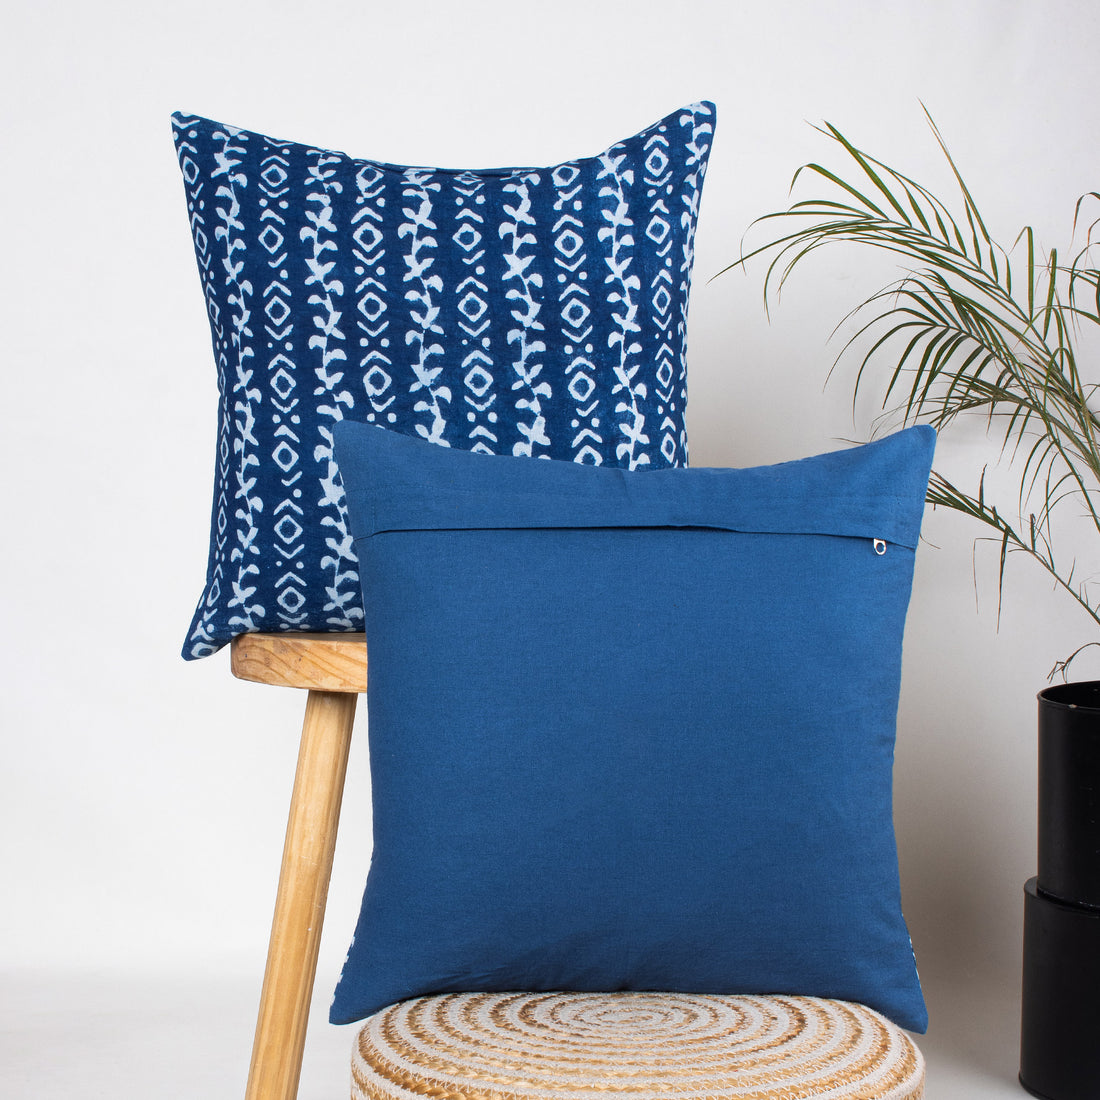 Silk Cushion Covers Hand Block Indigo Abstract Printed Cotton Online